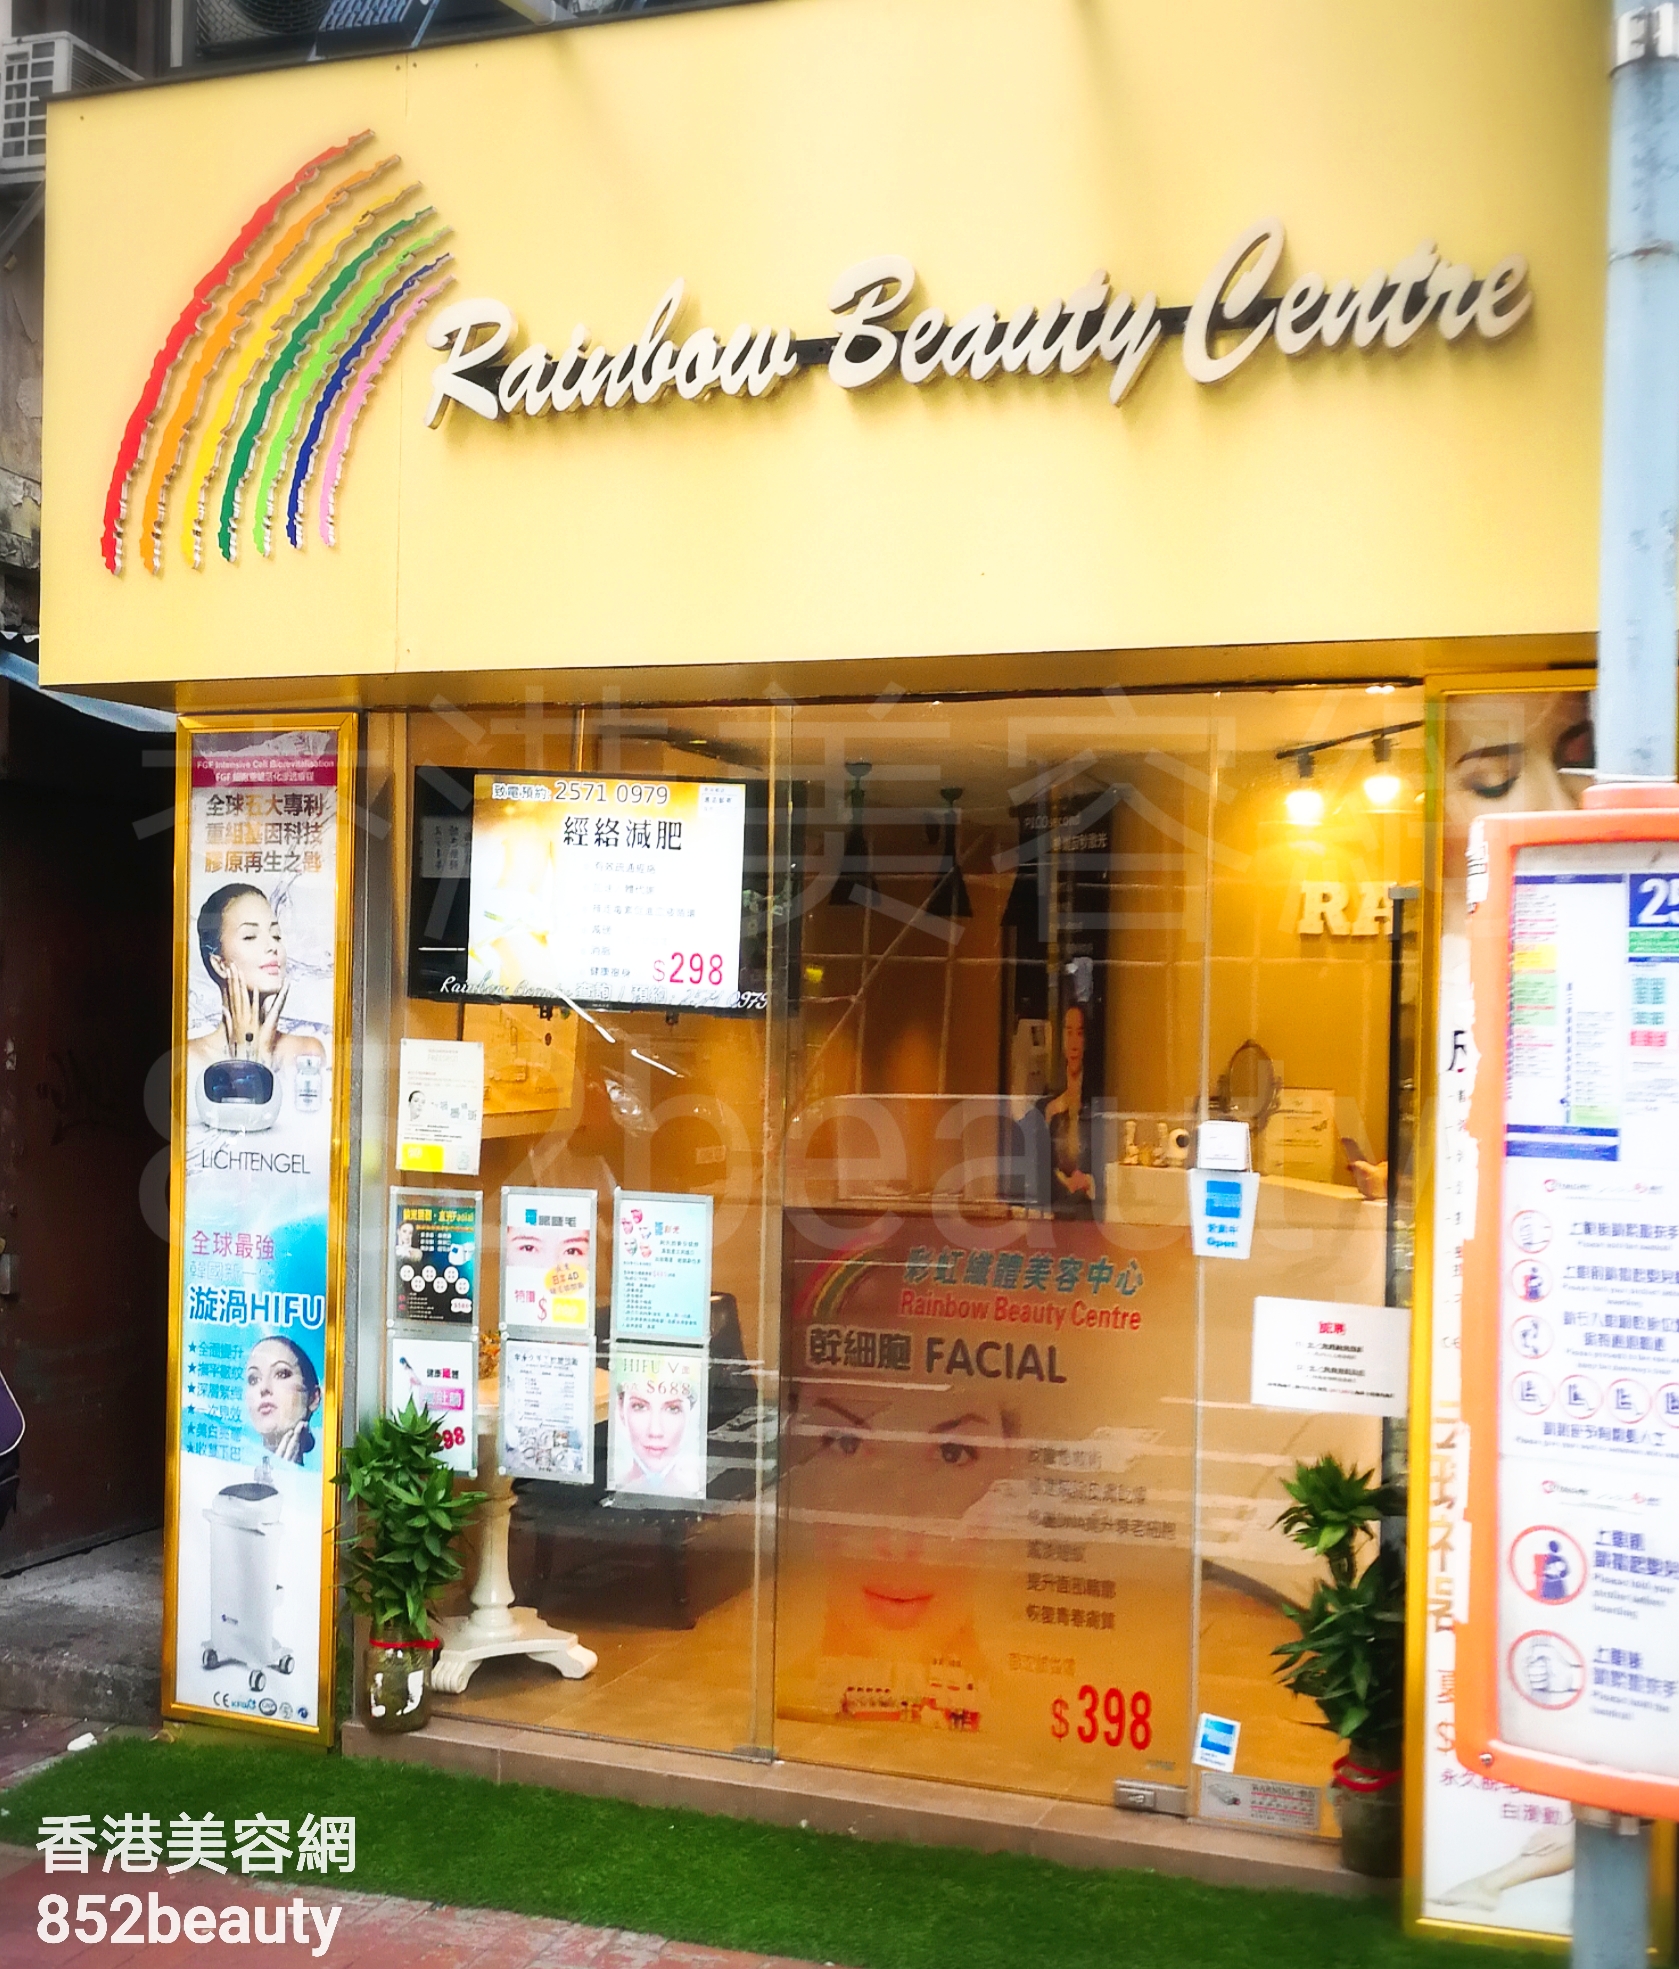 眼部護理: Rainbow Beauty Centre